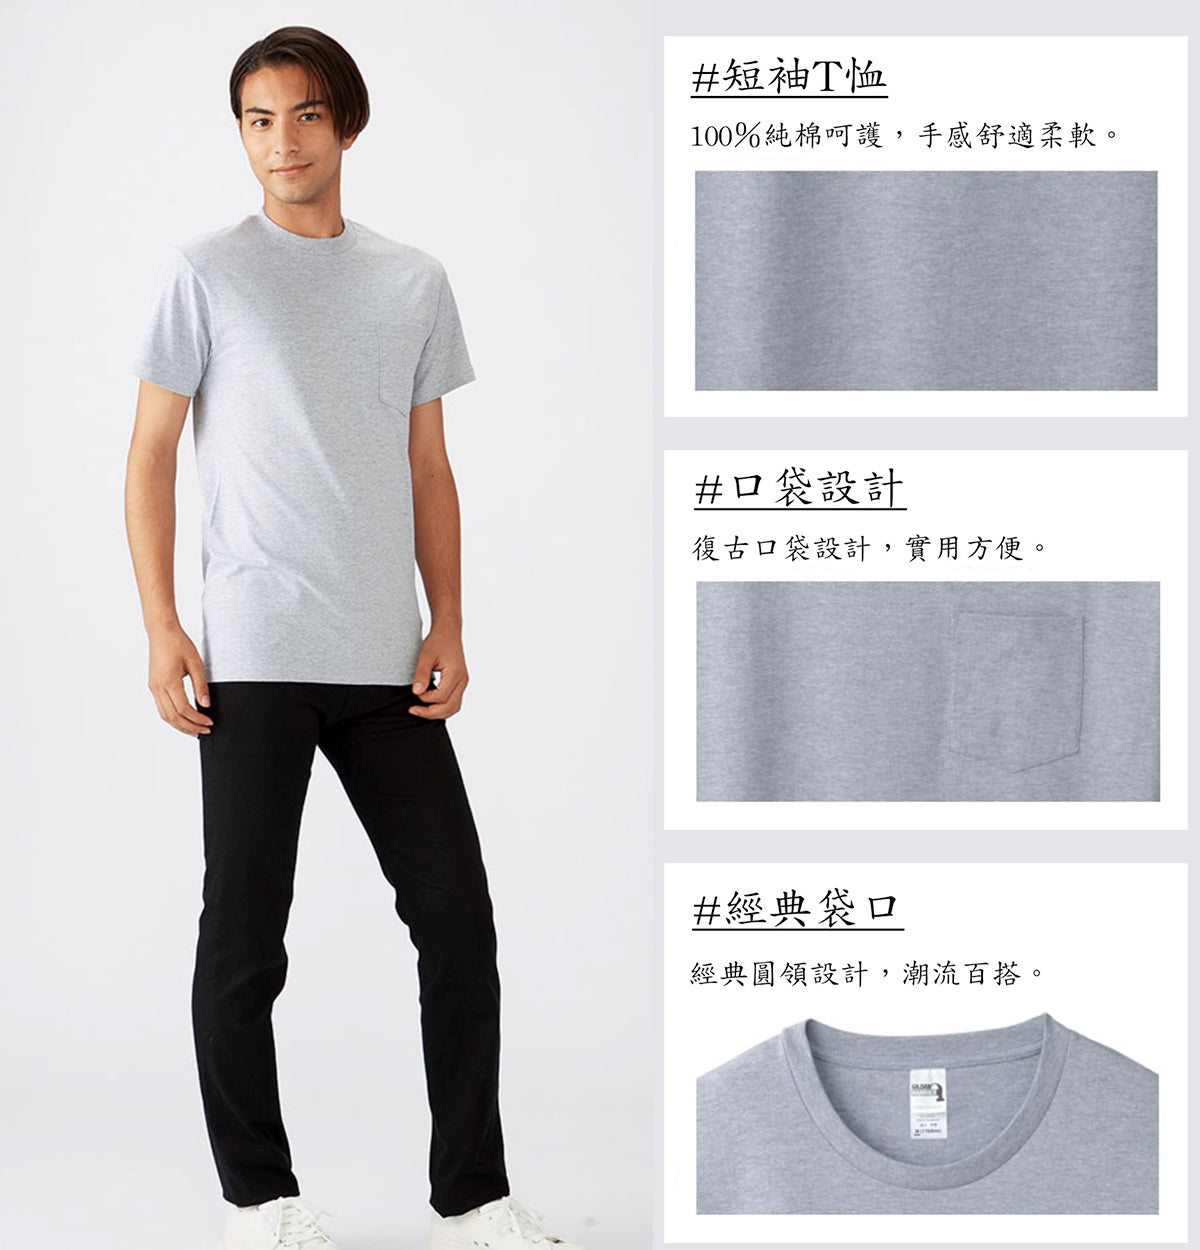 HA30 210g 成人圓領口袋T恤